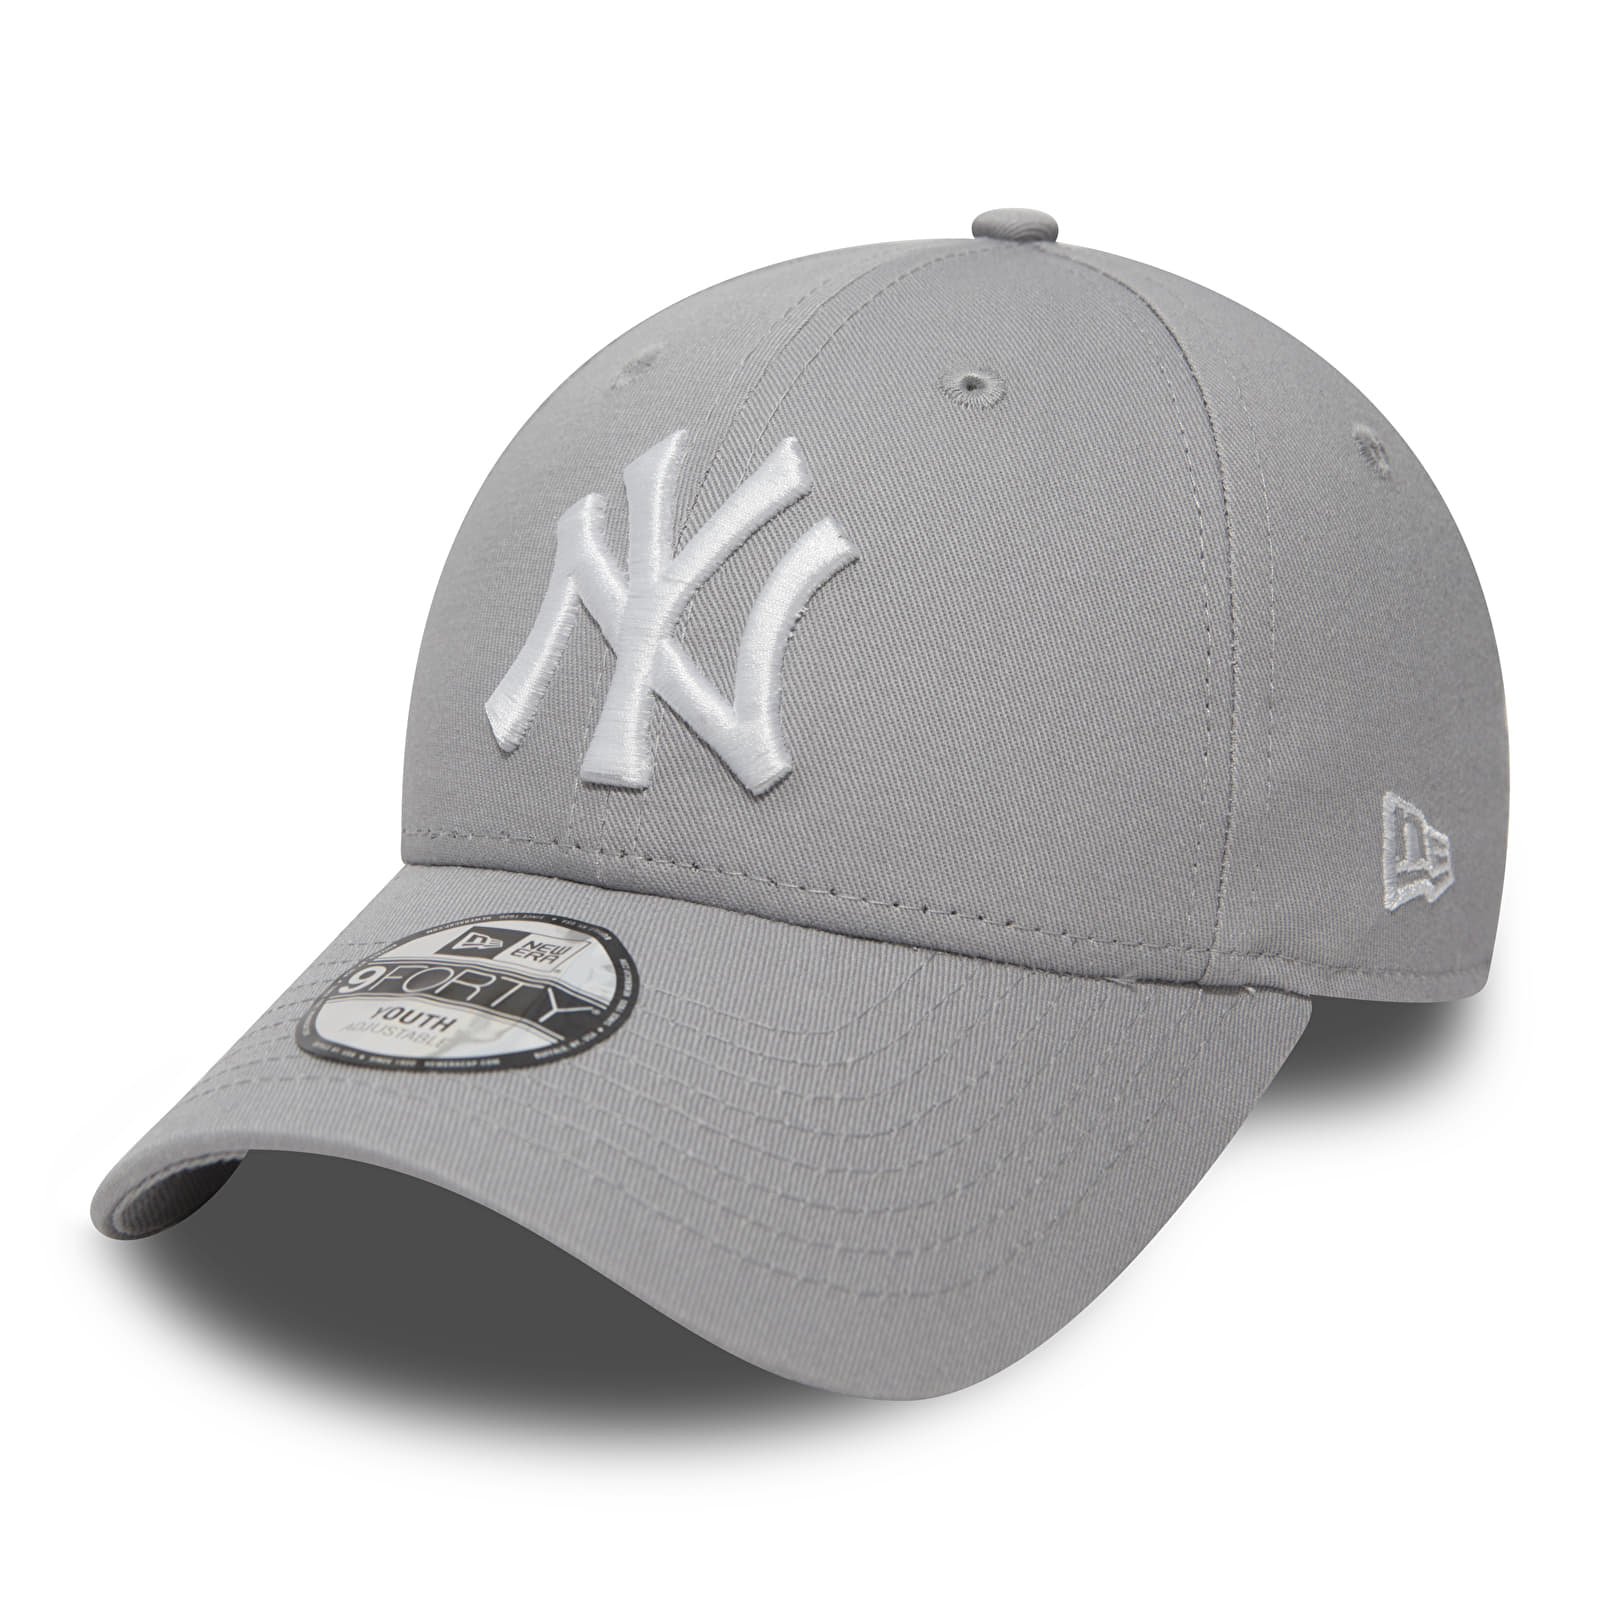 Caps New Era Youth 9Forty MLB League New York Yankees Cap Grey/ White